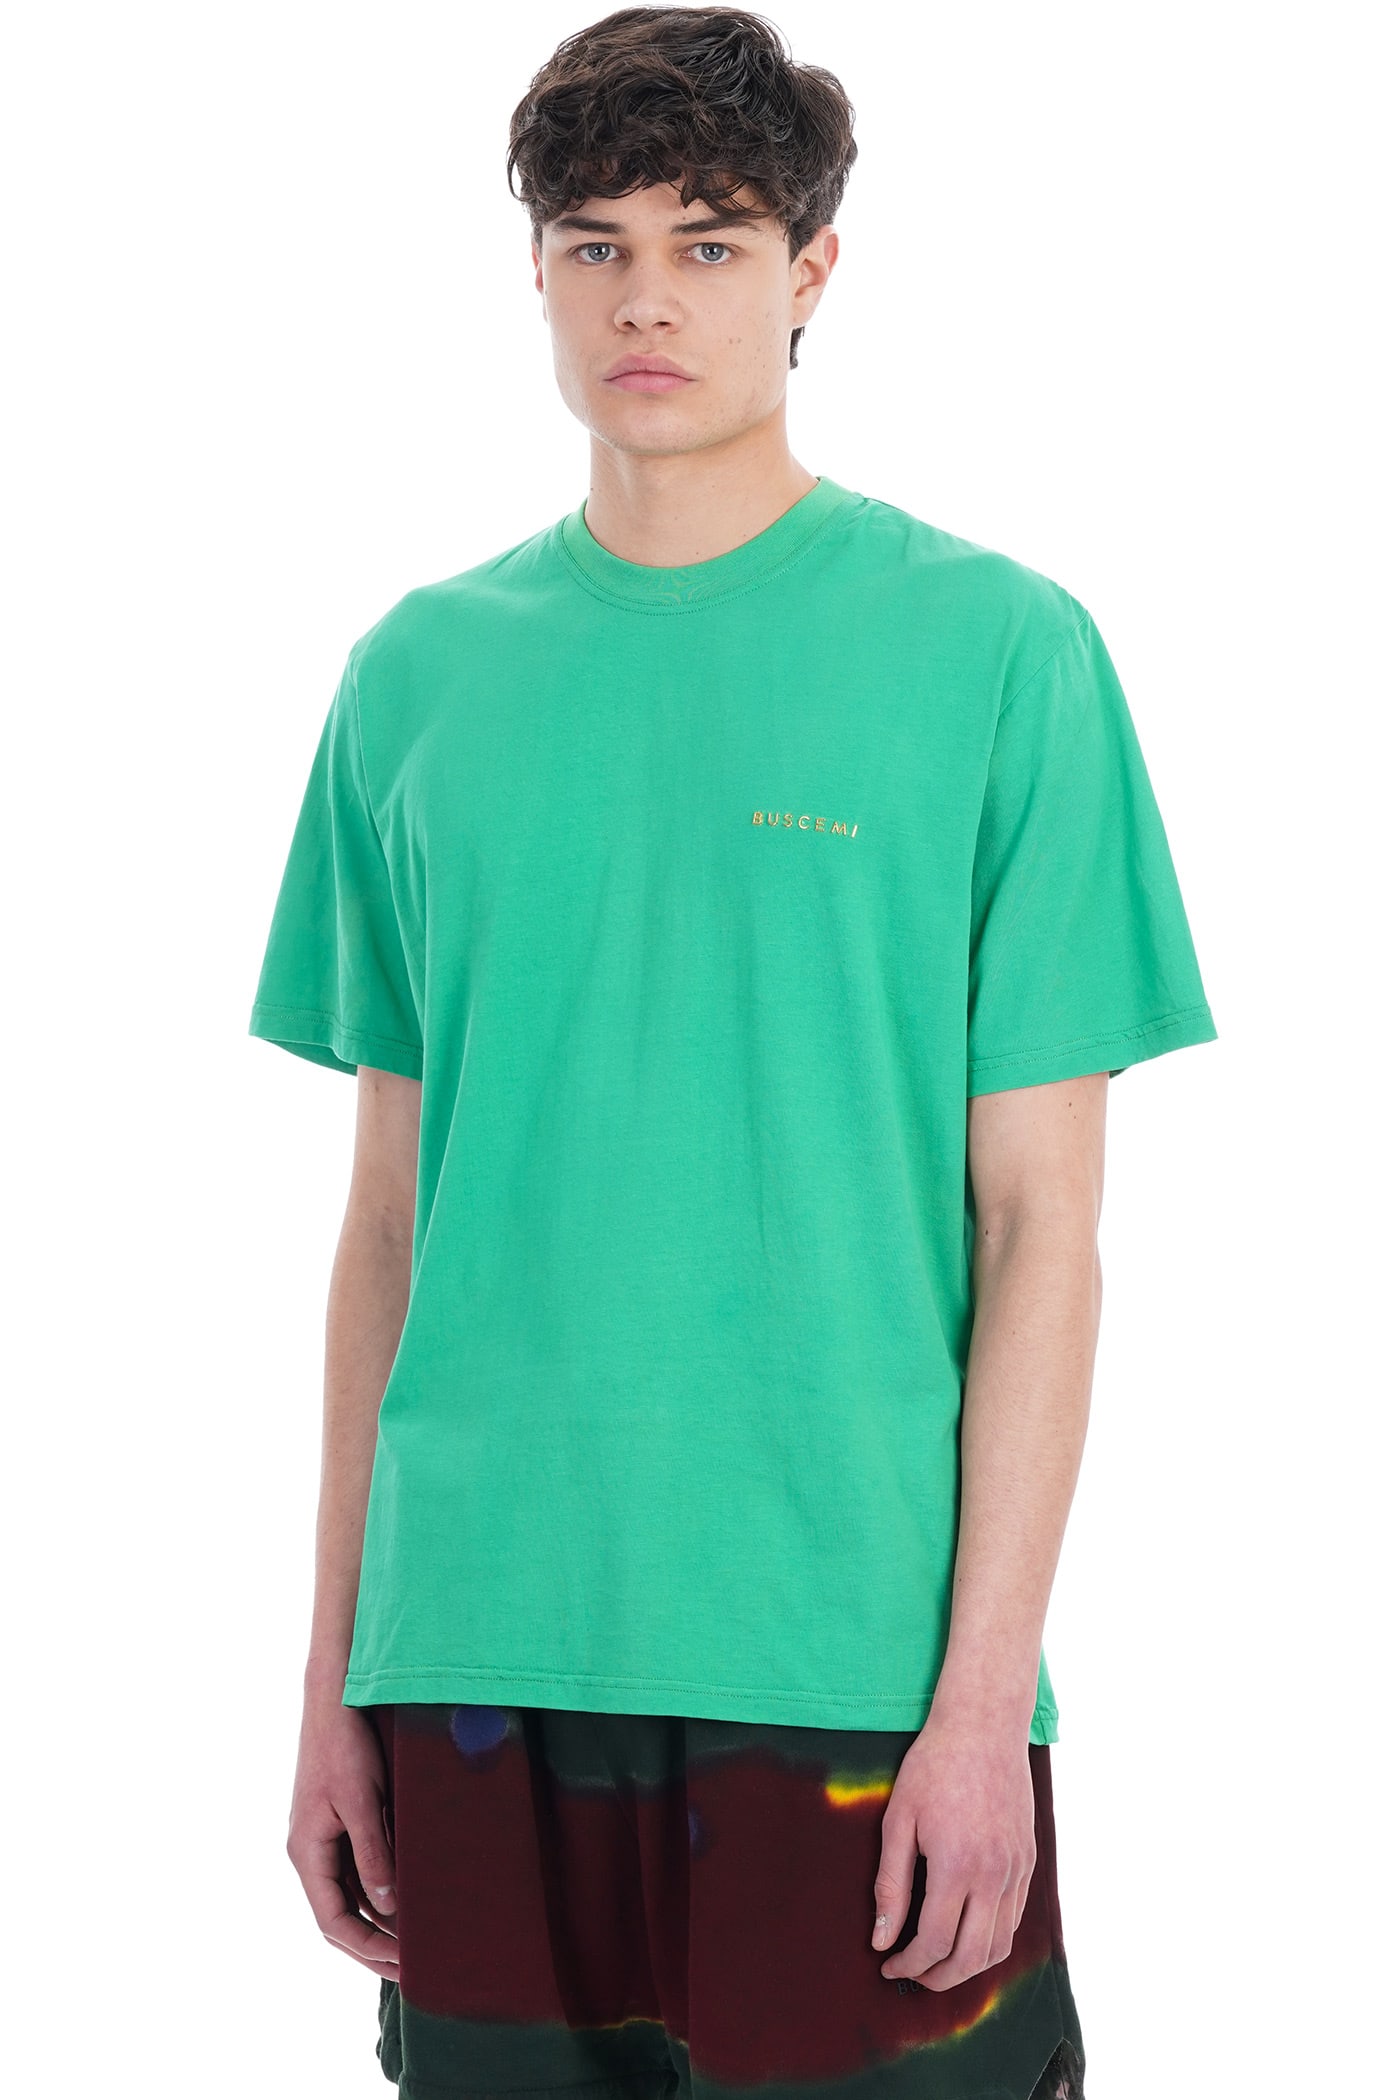 Buscemi T-shirt In Green Cotton